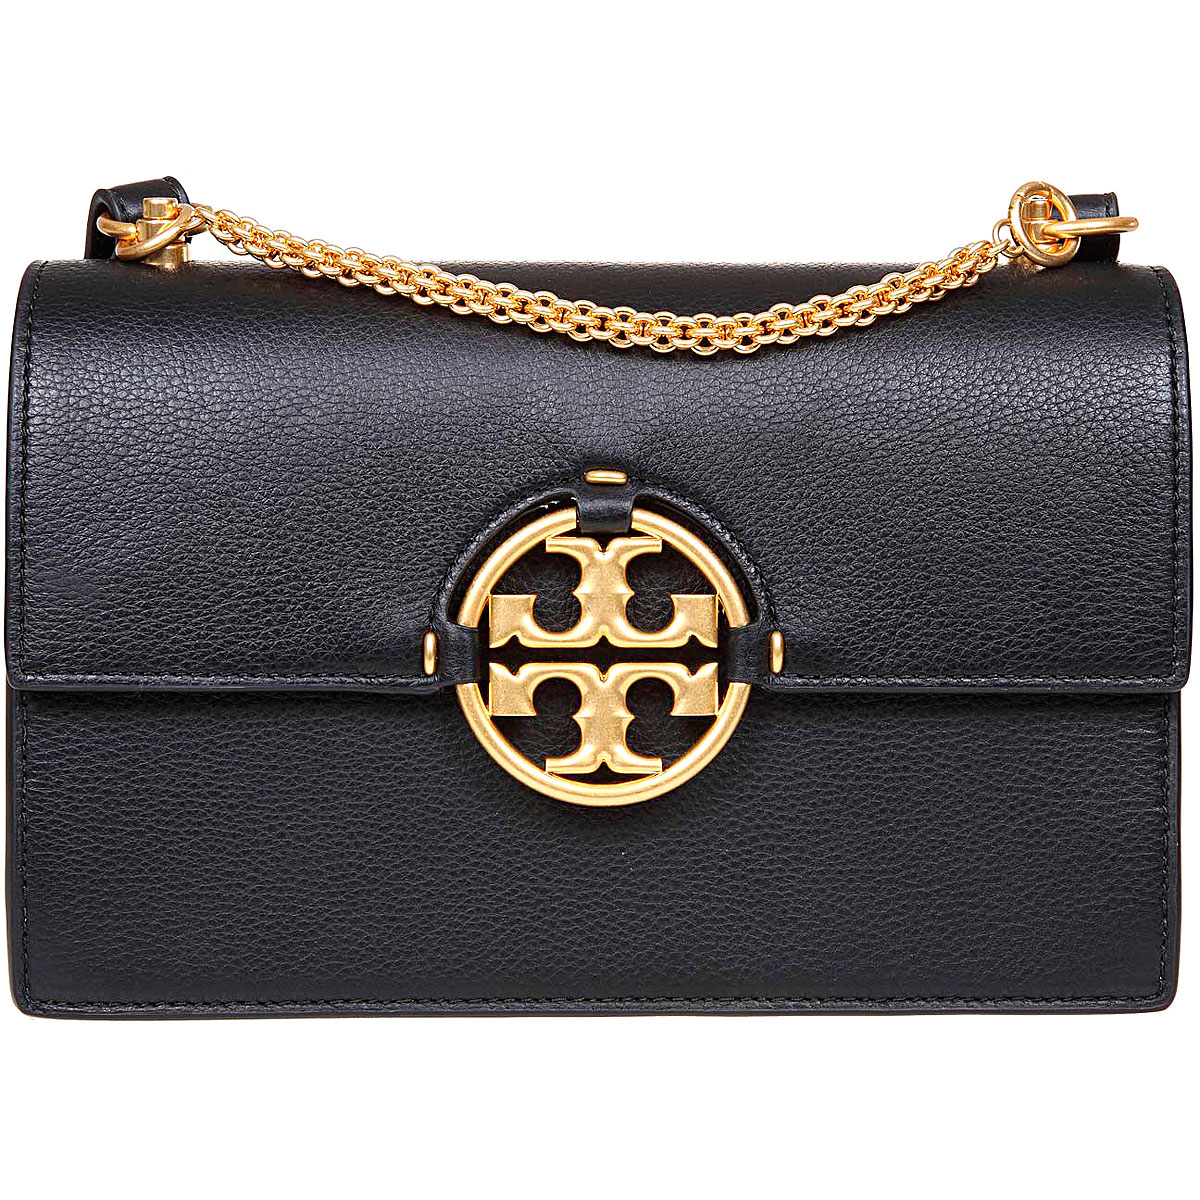 Handbags Tory Burch, Style code 81688001